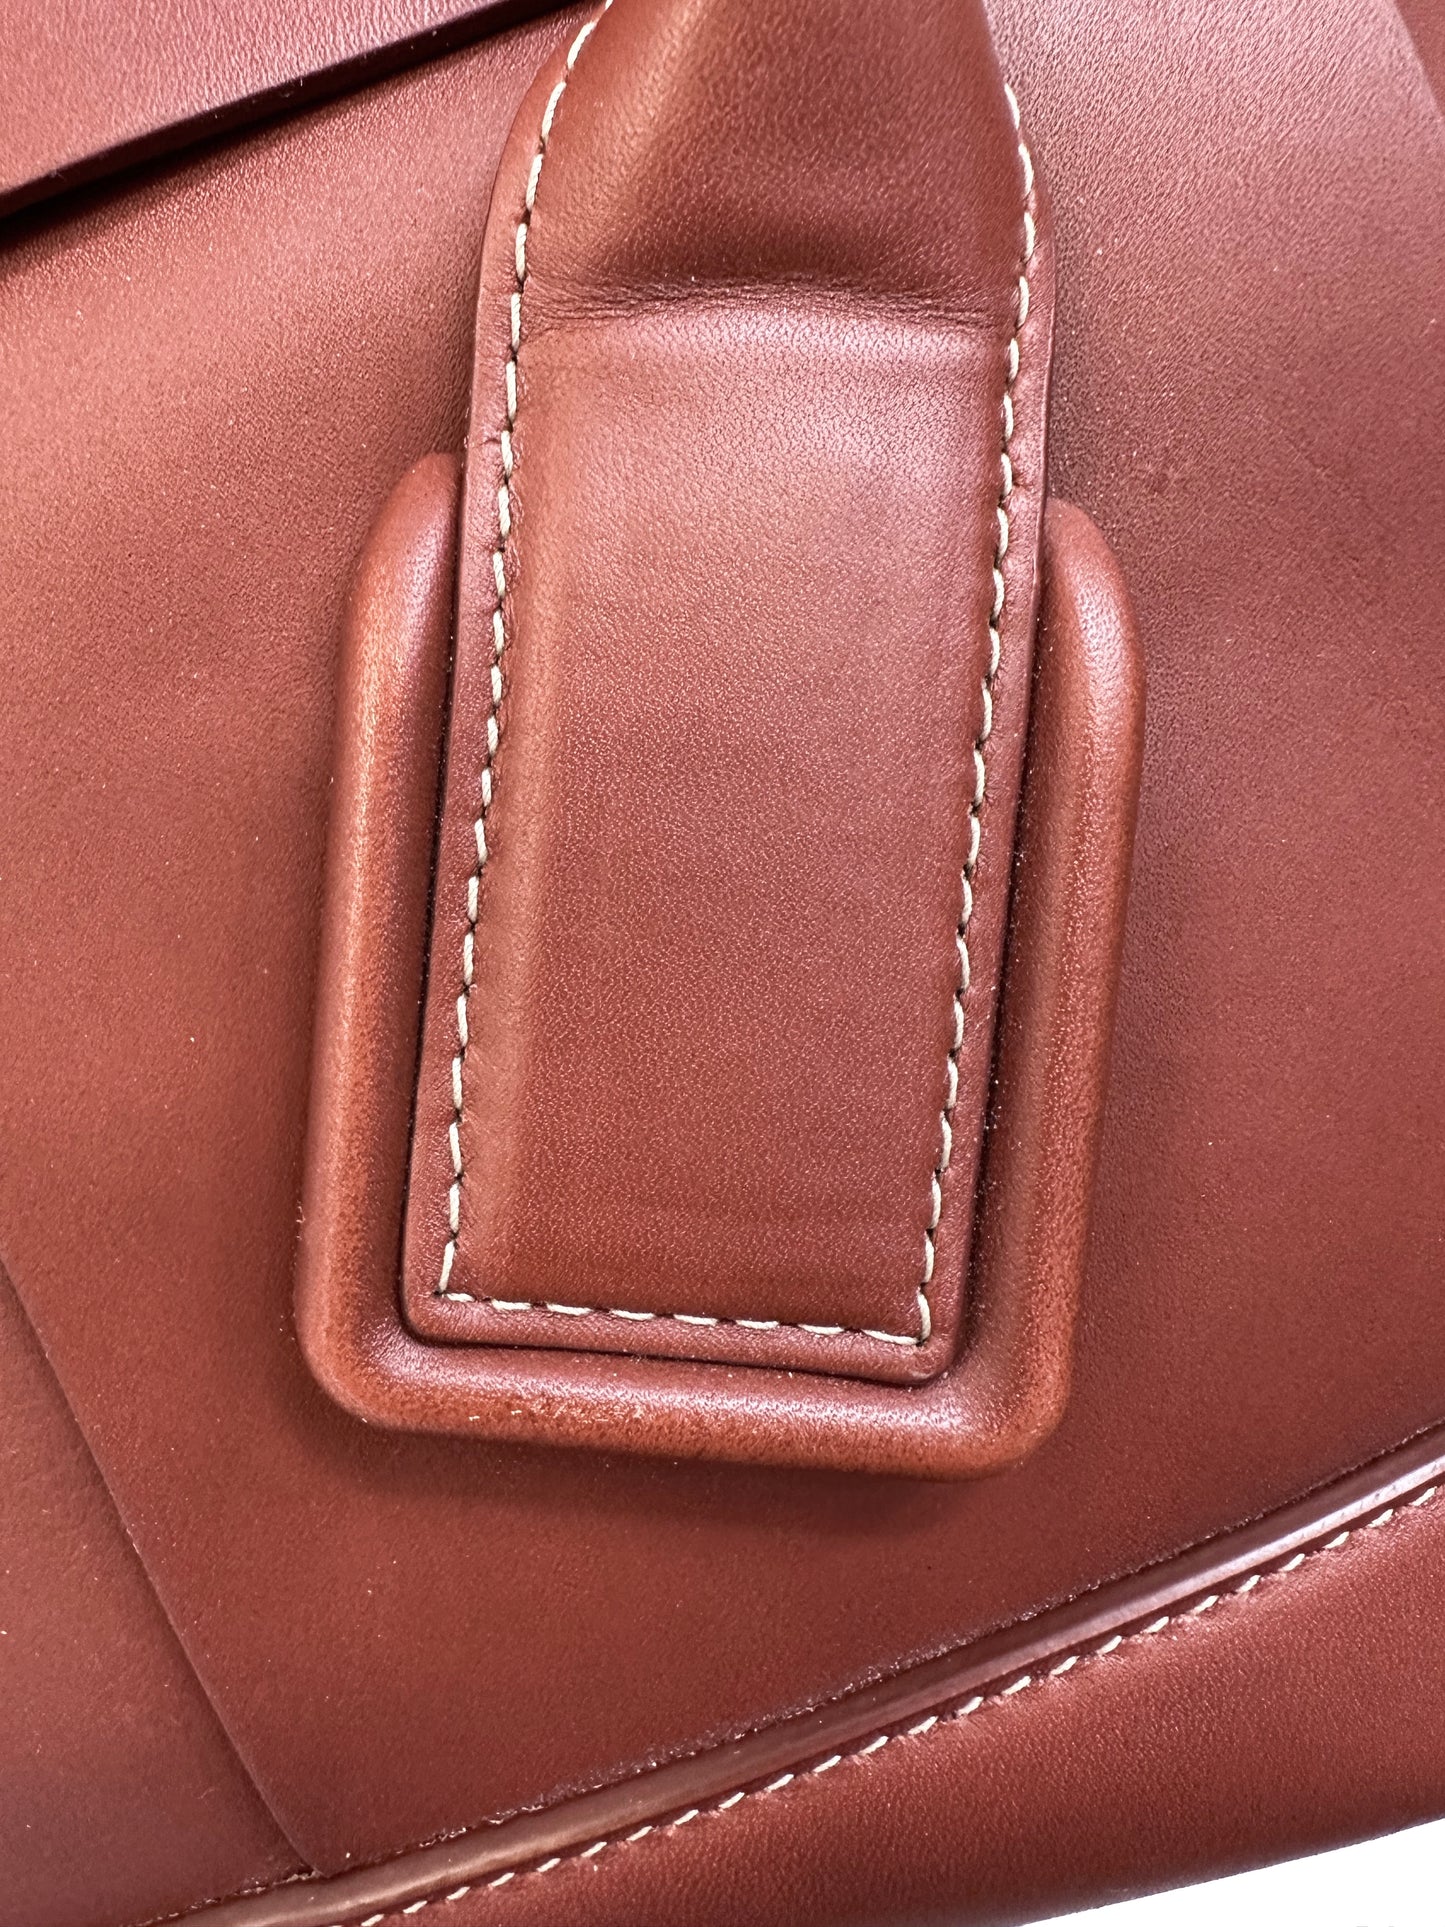 Bottega Veneta Arco Large Leather Bag